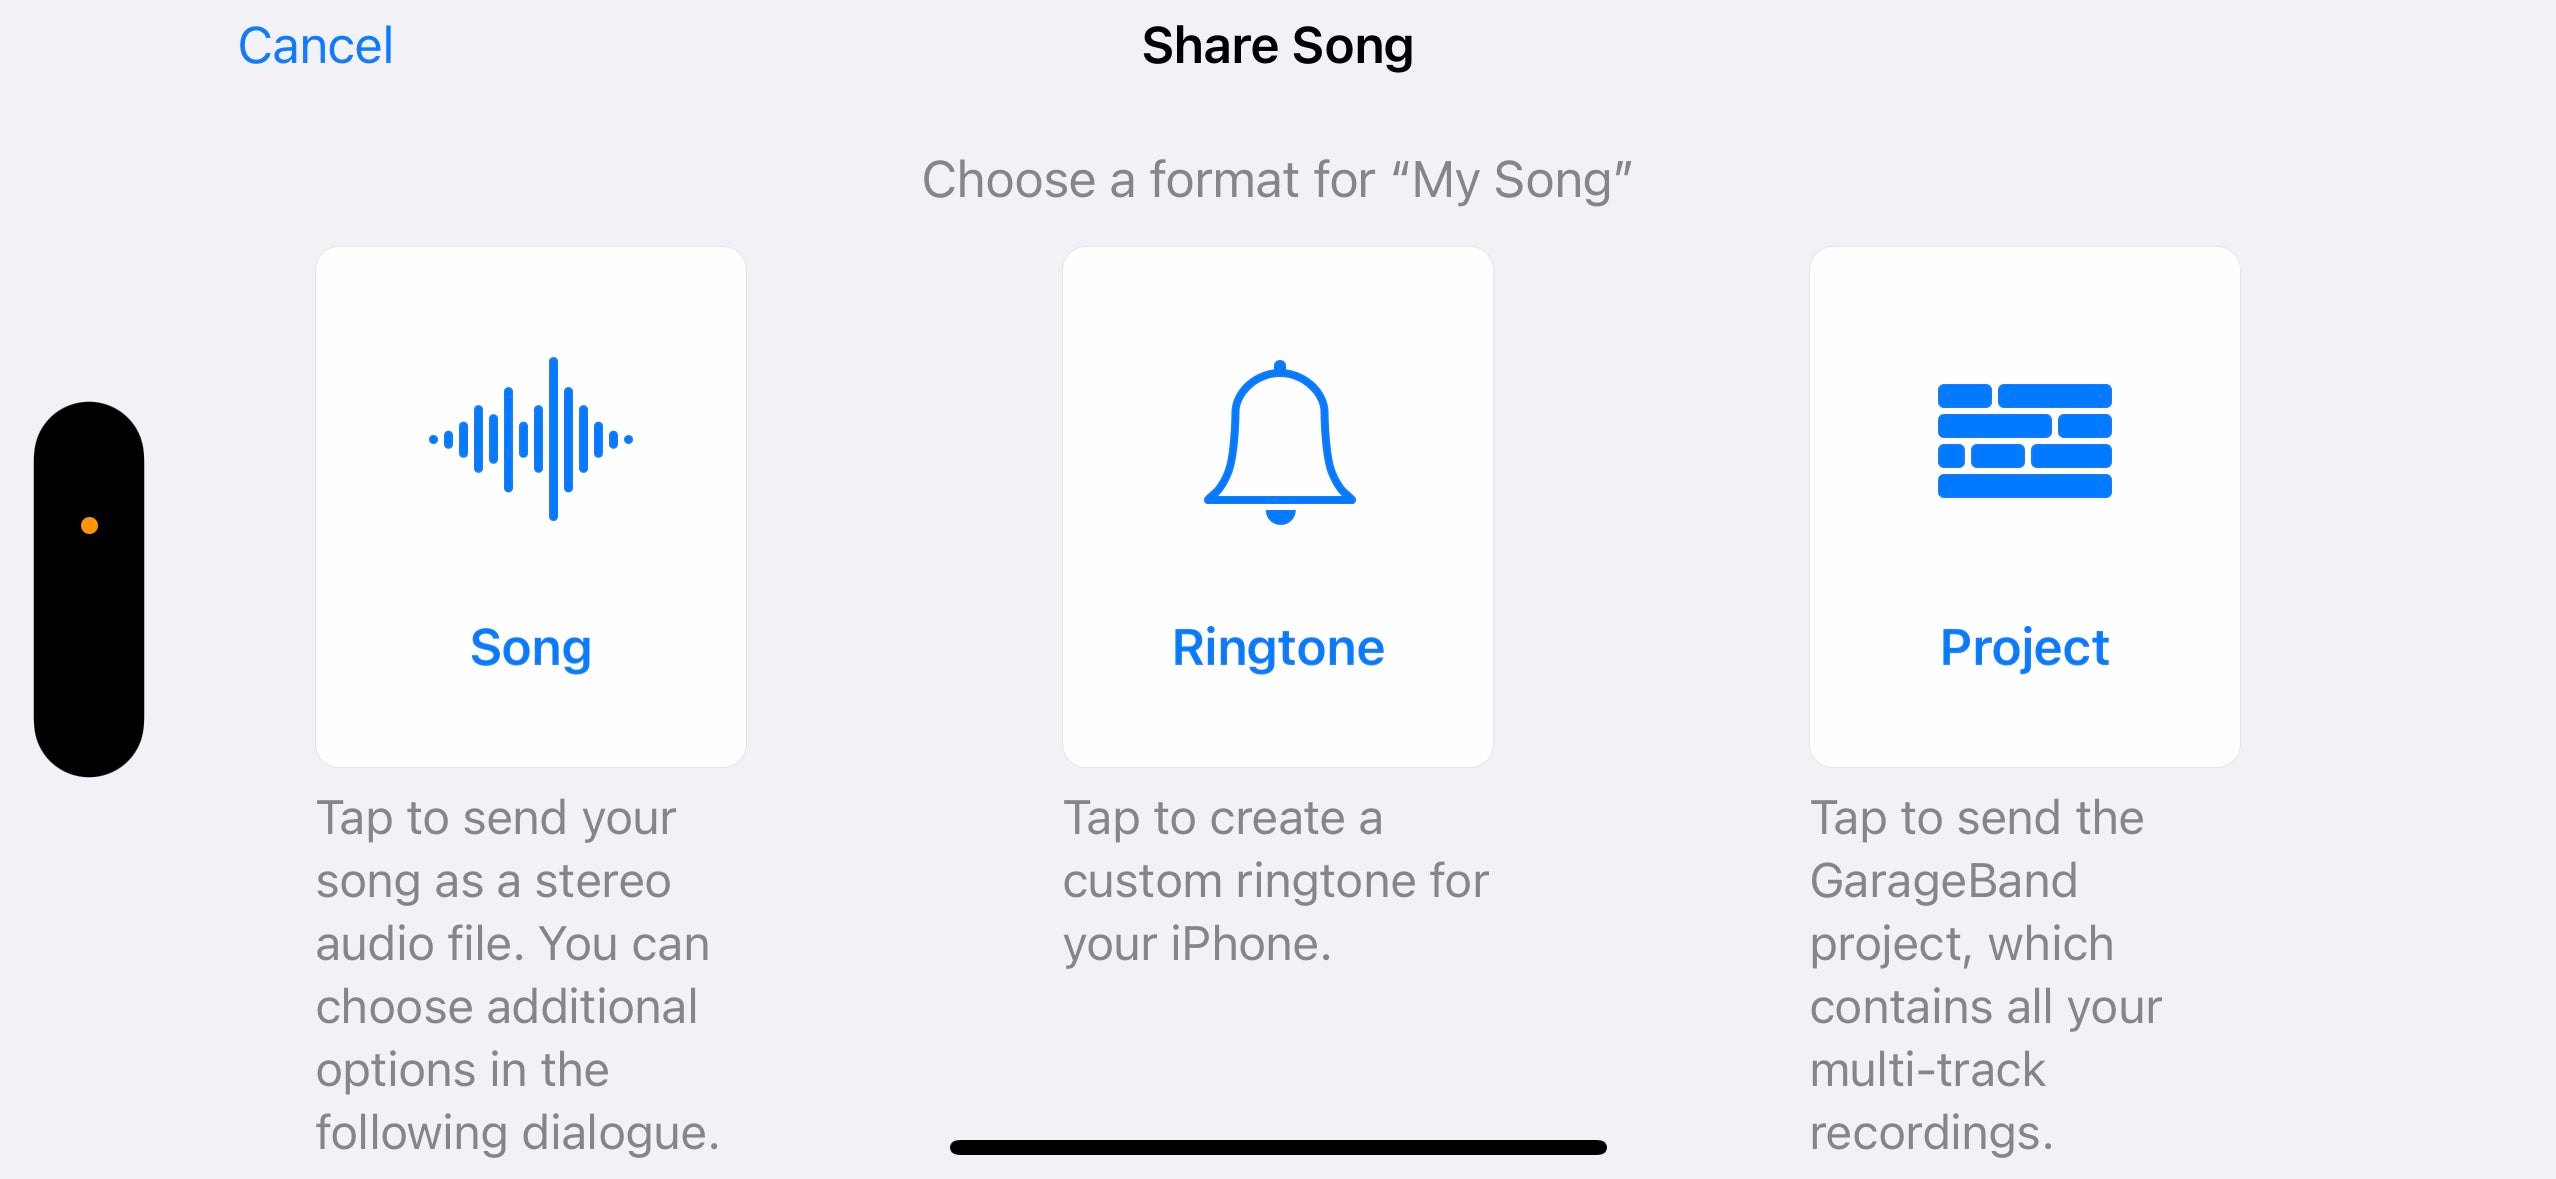 Share song as Ringtone